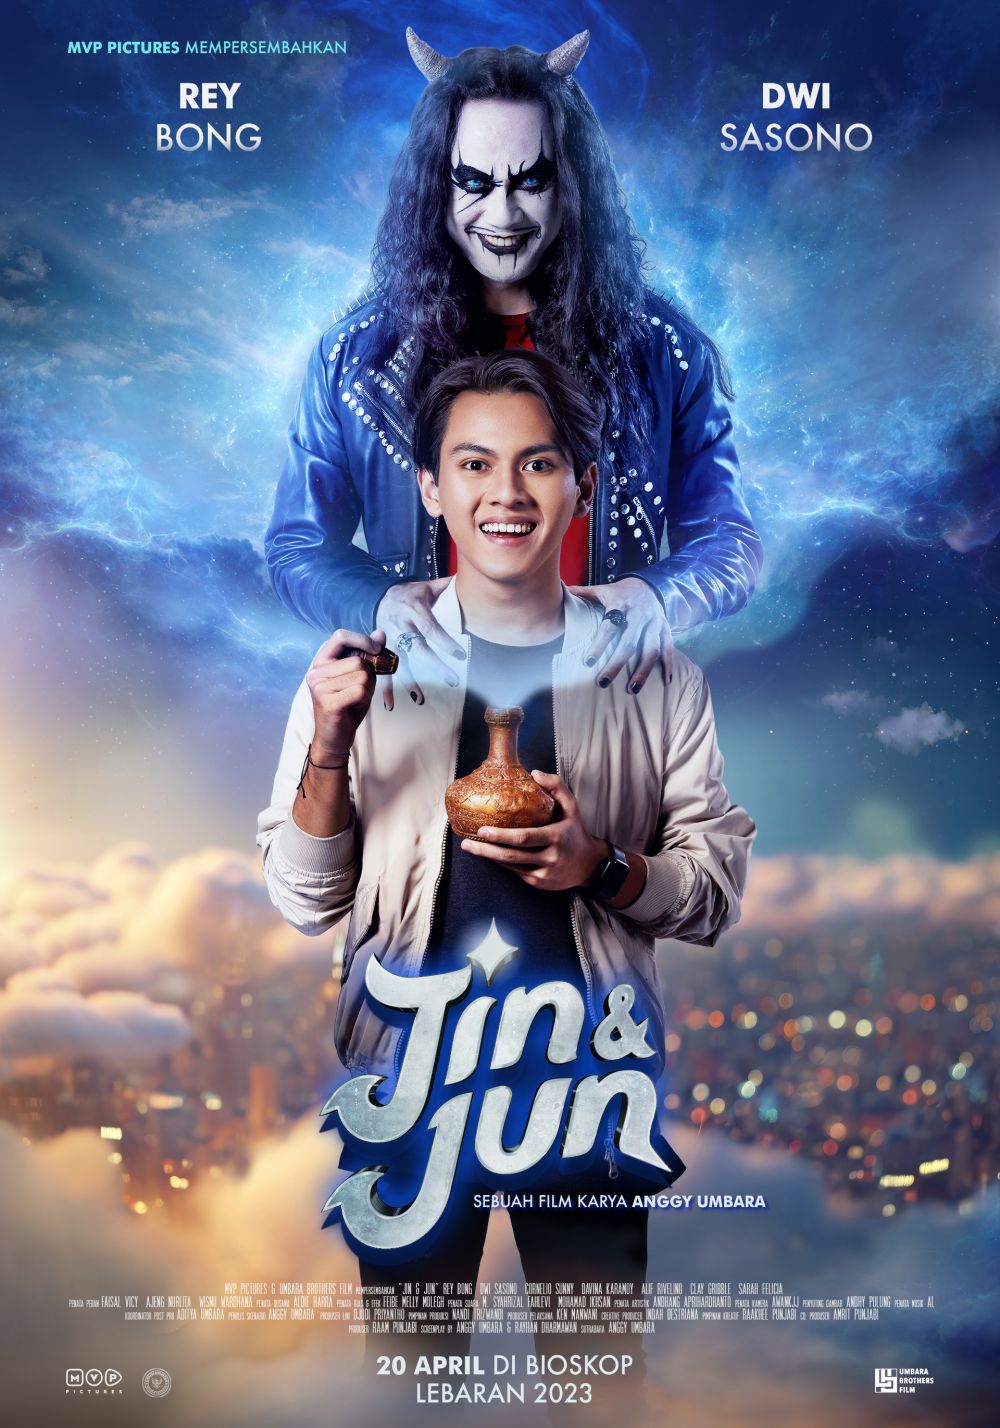 Jin & Jun The Movie, film lintas generasi yang siap ramaikan libur lebaran bersama keluarga